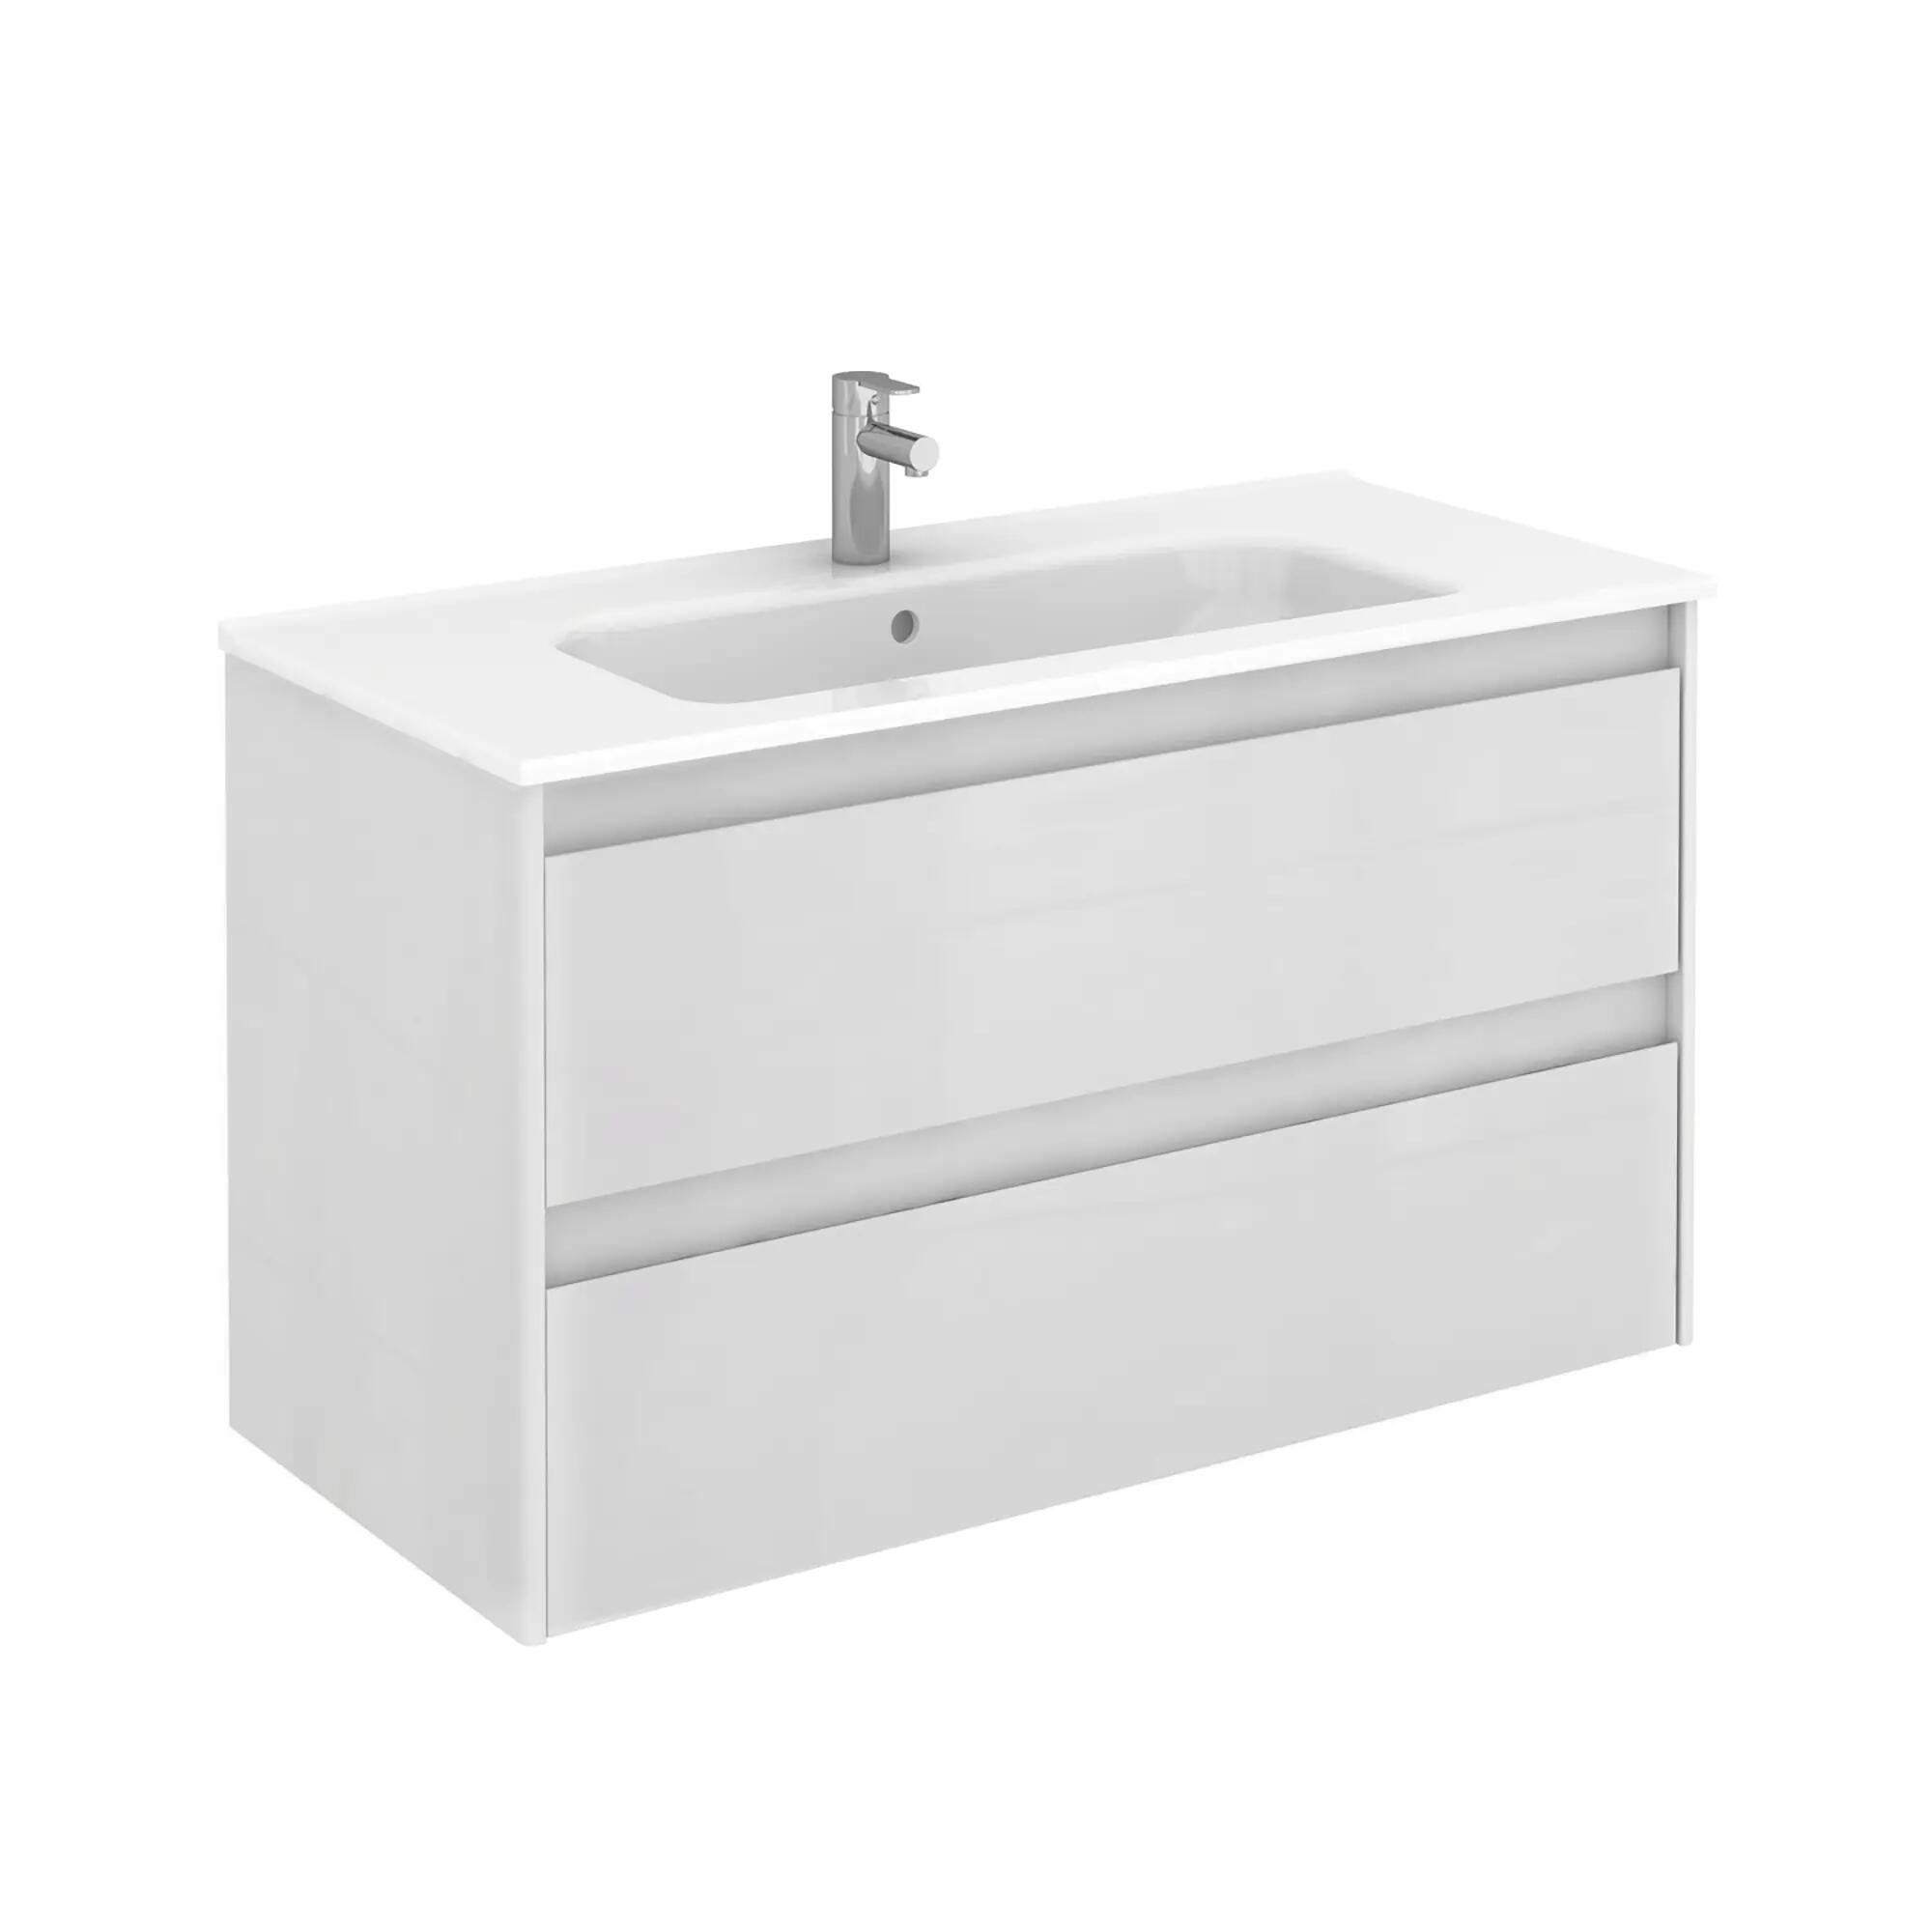 Mueble de baño con lavabo alfa blanco 100x45 cm